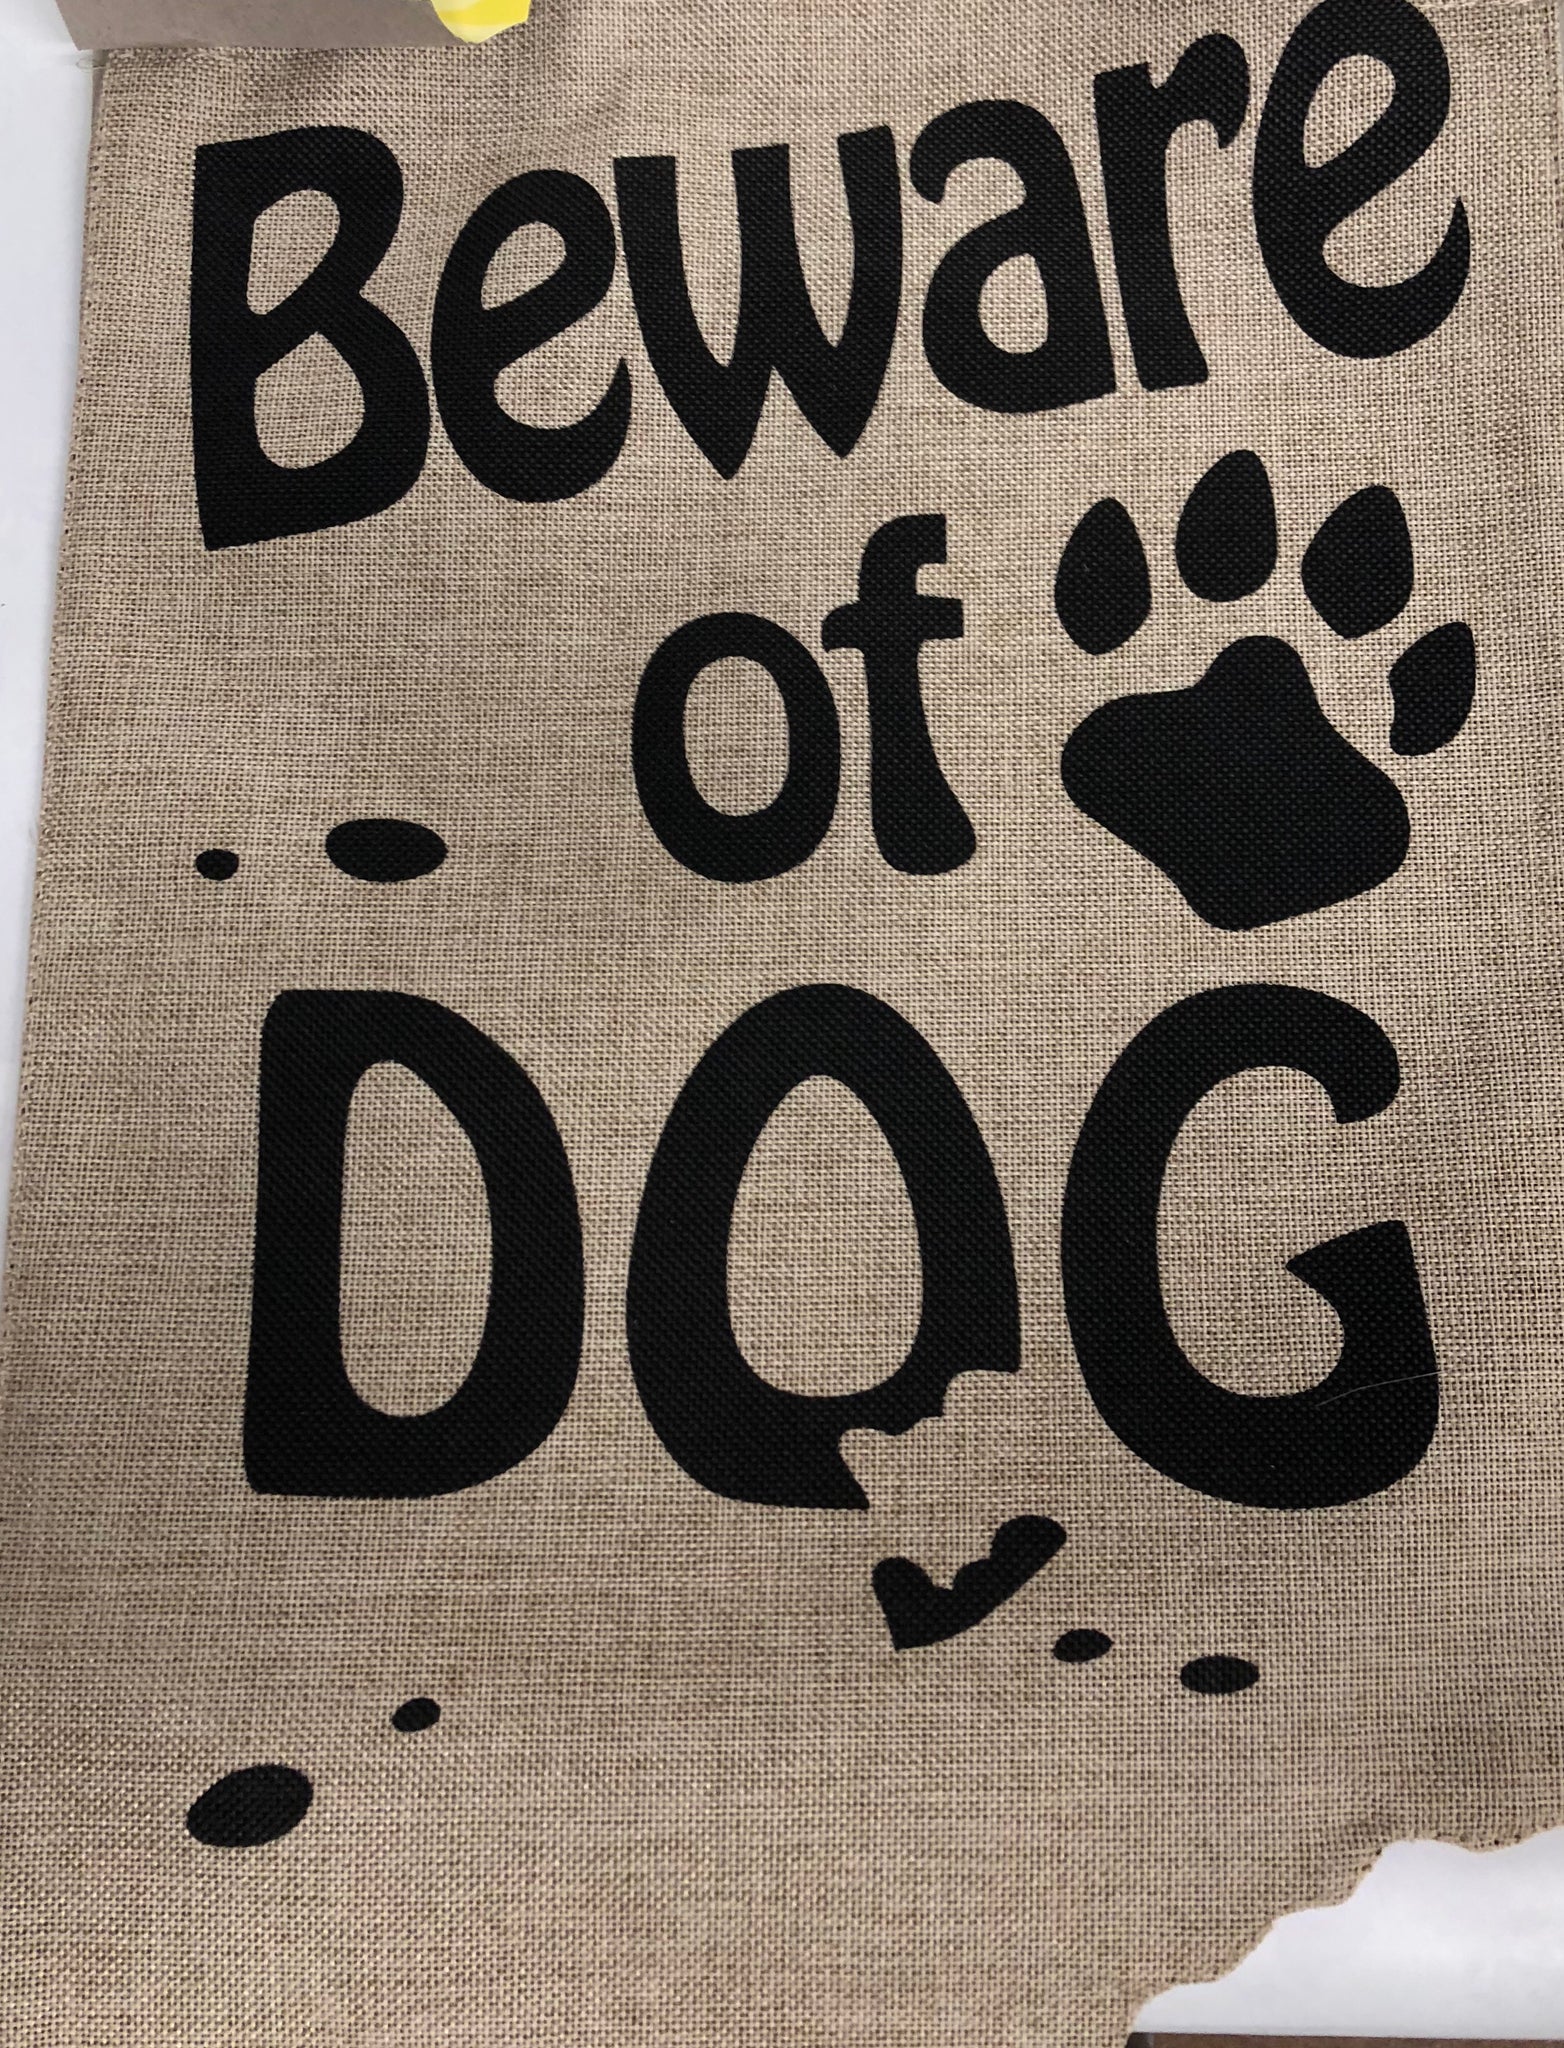 Beware of Dog -Small Flag